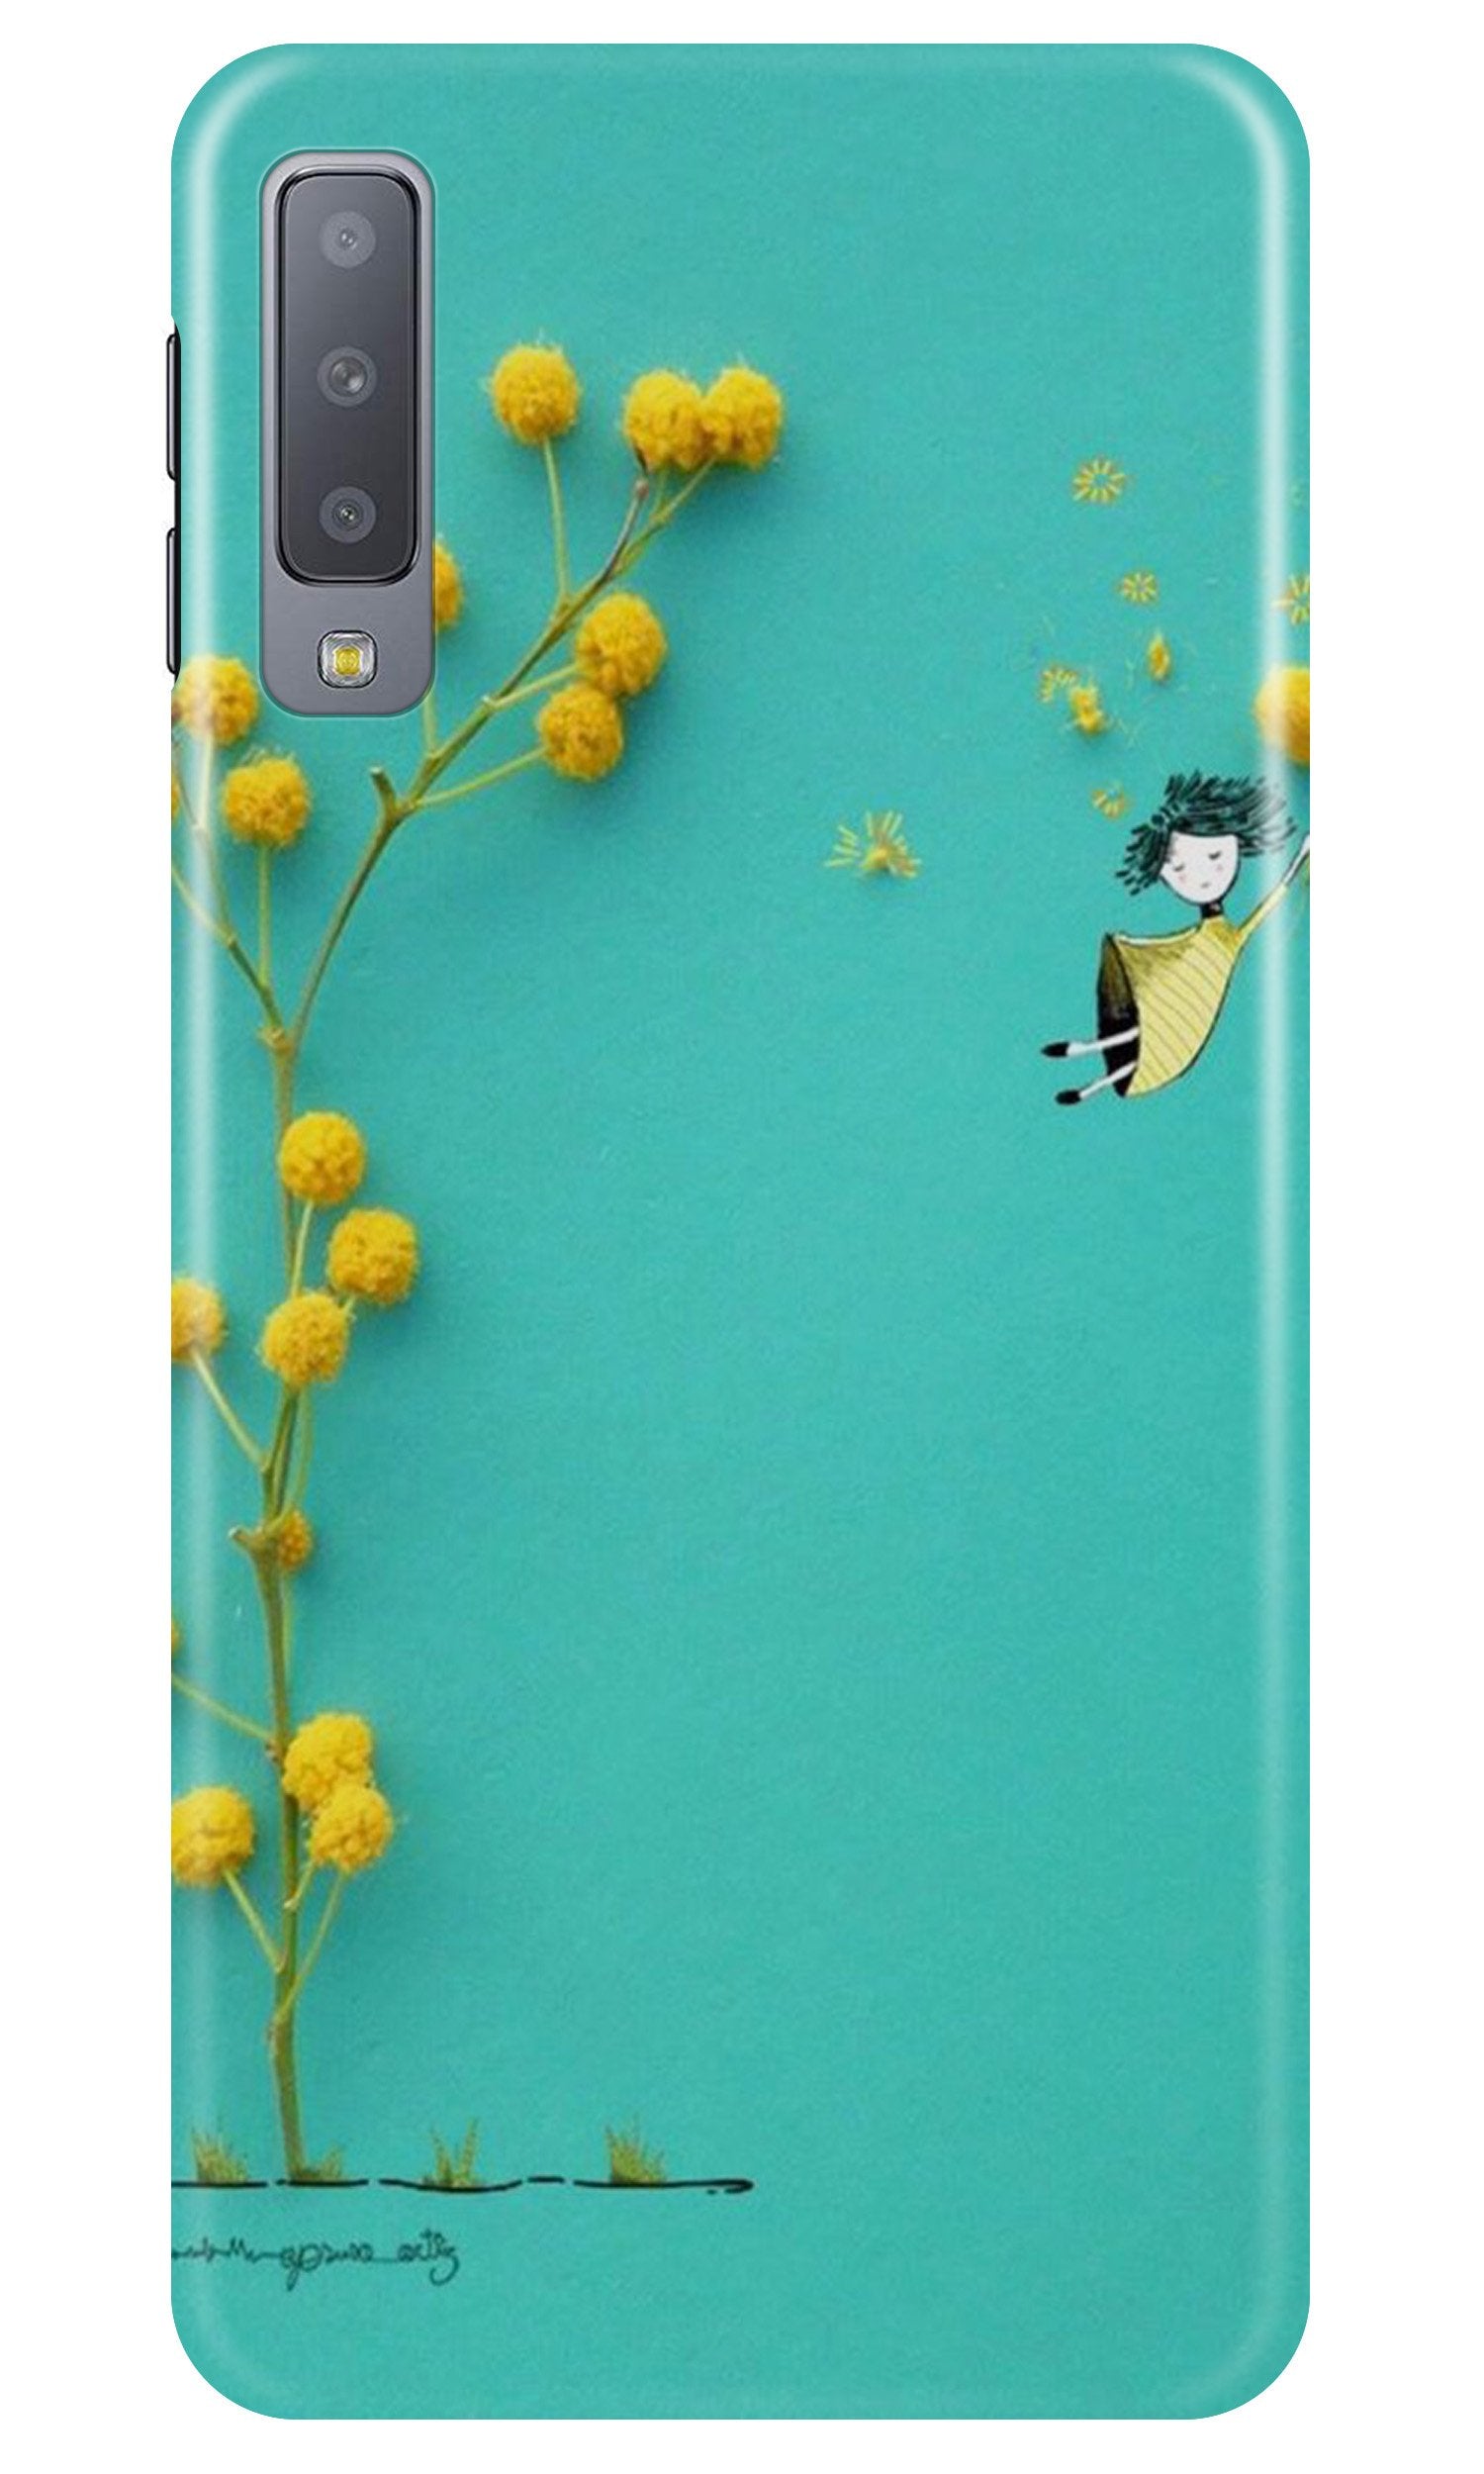 Flowers Girl Case for Samung Galaxy A70s (Design No. 216)